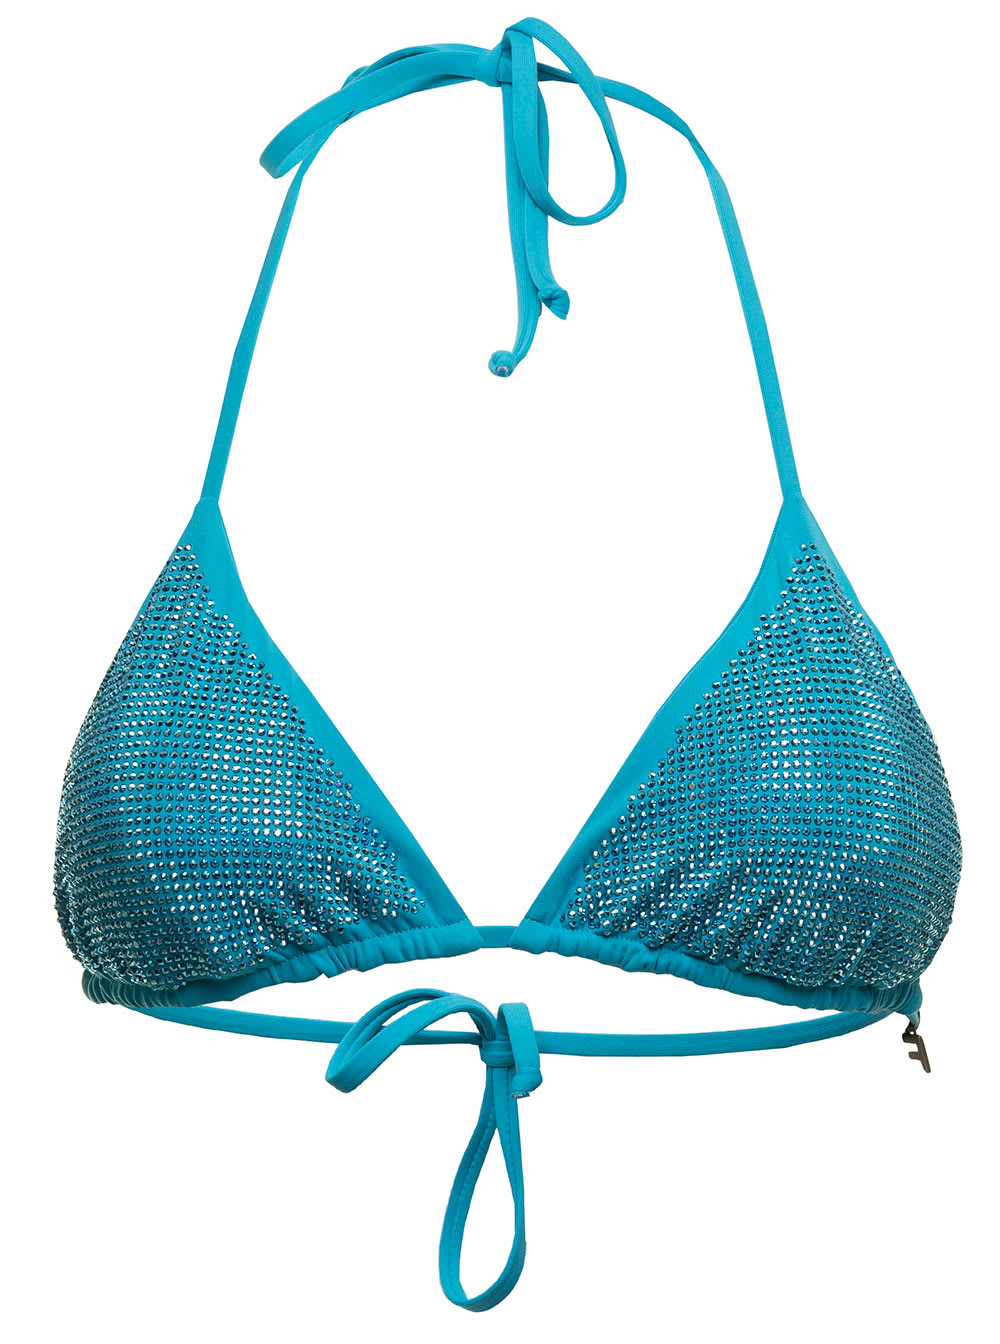 Fisico - Cristina Ferrari Fisico Womanss Rhinestone-embellished Turquoise Bikini Top